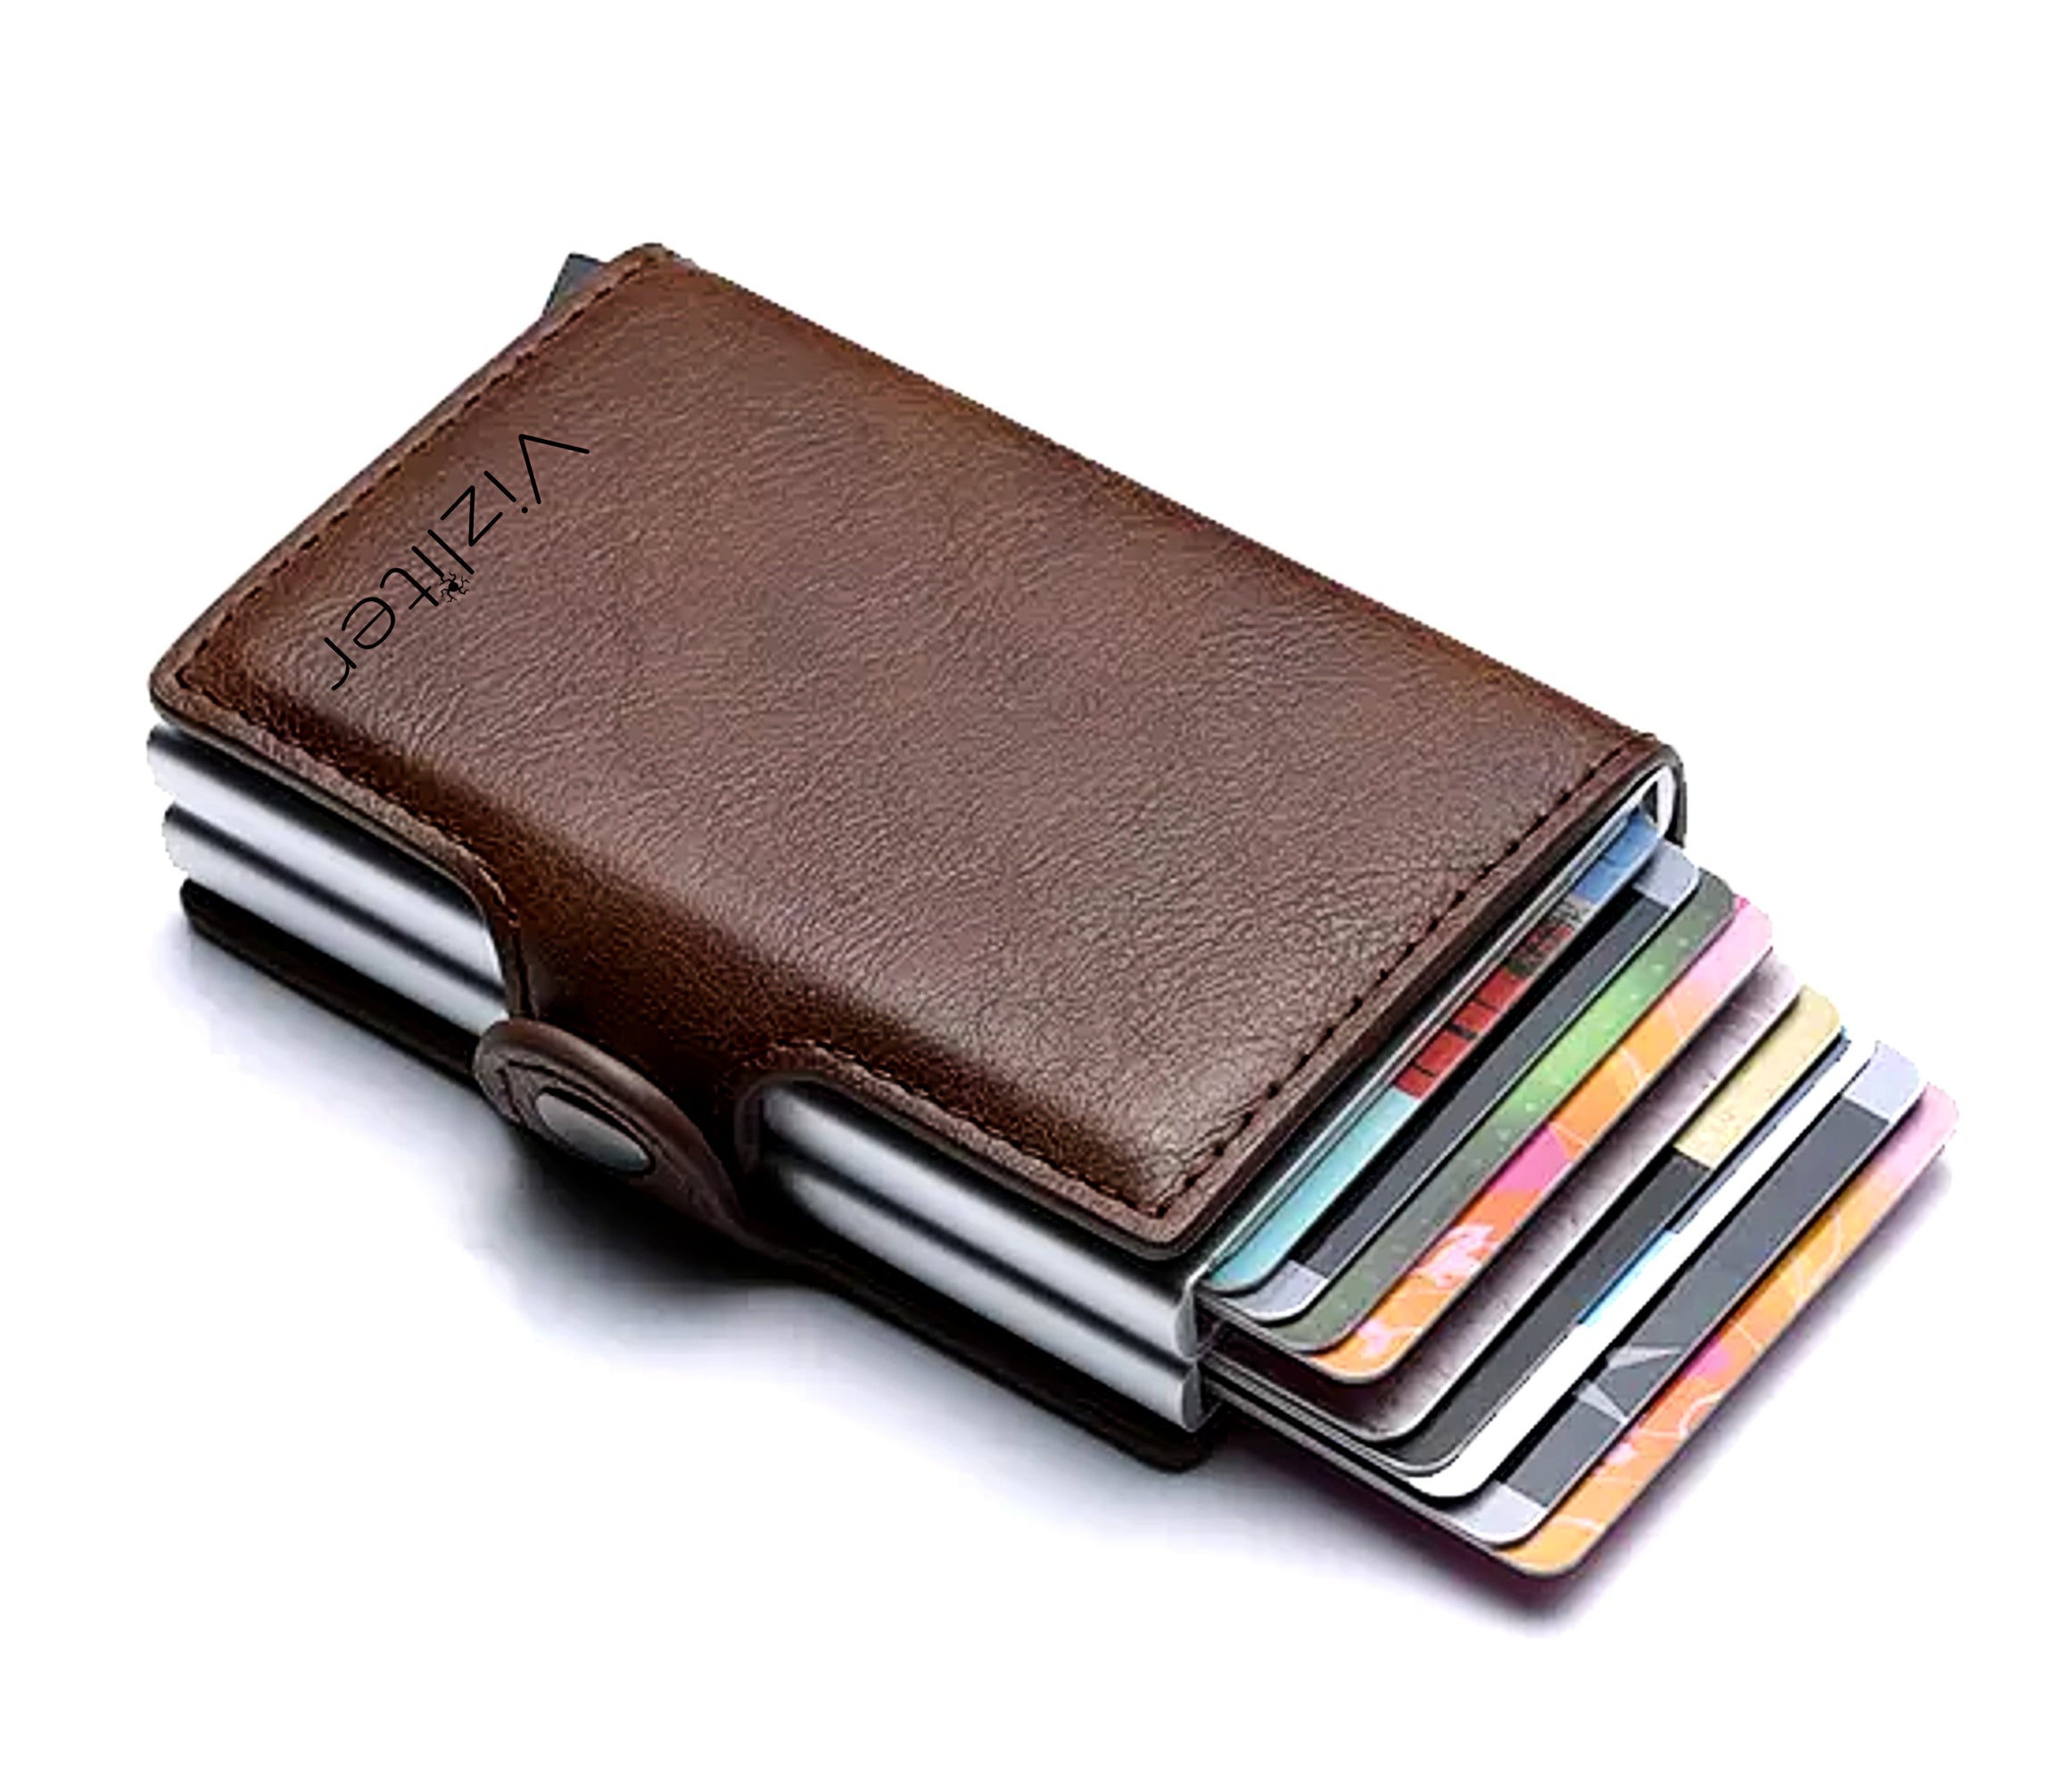 Vizliter Minimalist RFID Blocking Wallet, Slim Wallet, Wallets for Men with 2 Slim Pop-up Card Holder, PU Leather Coffee